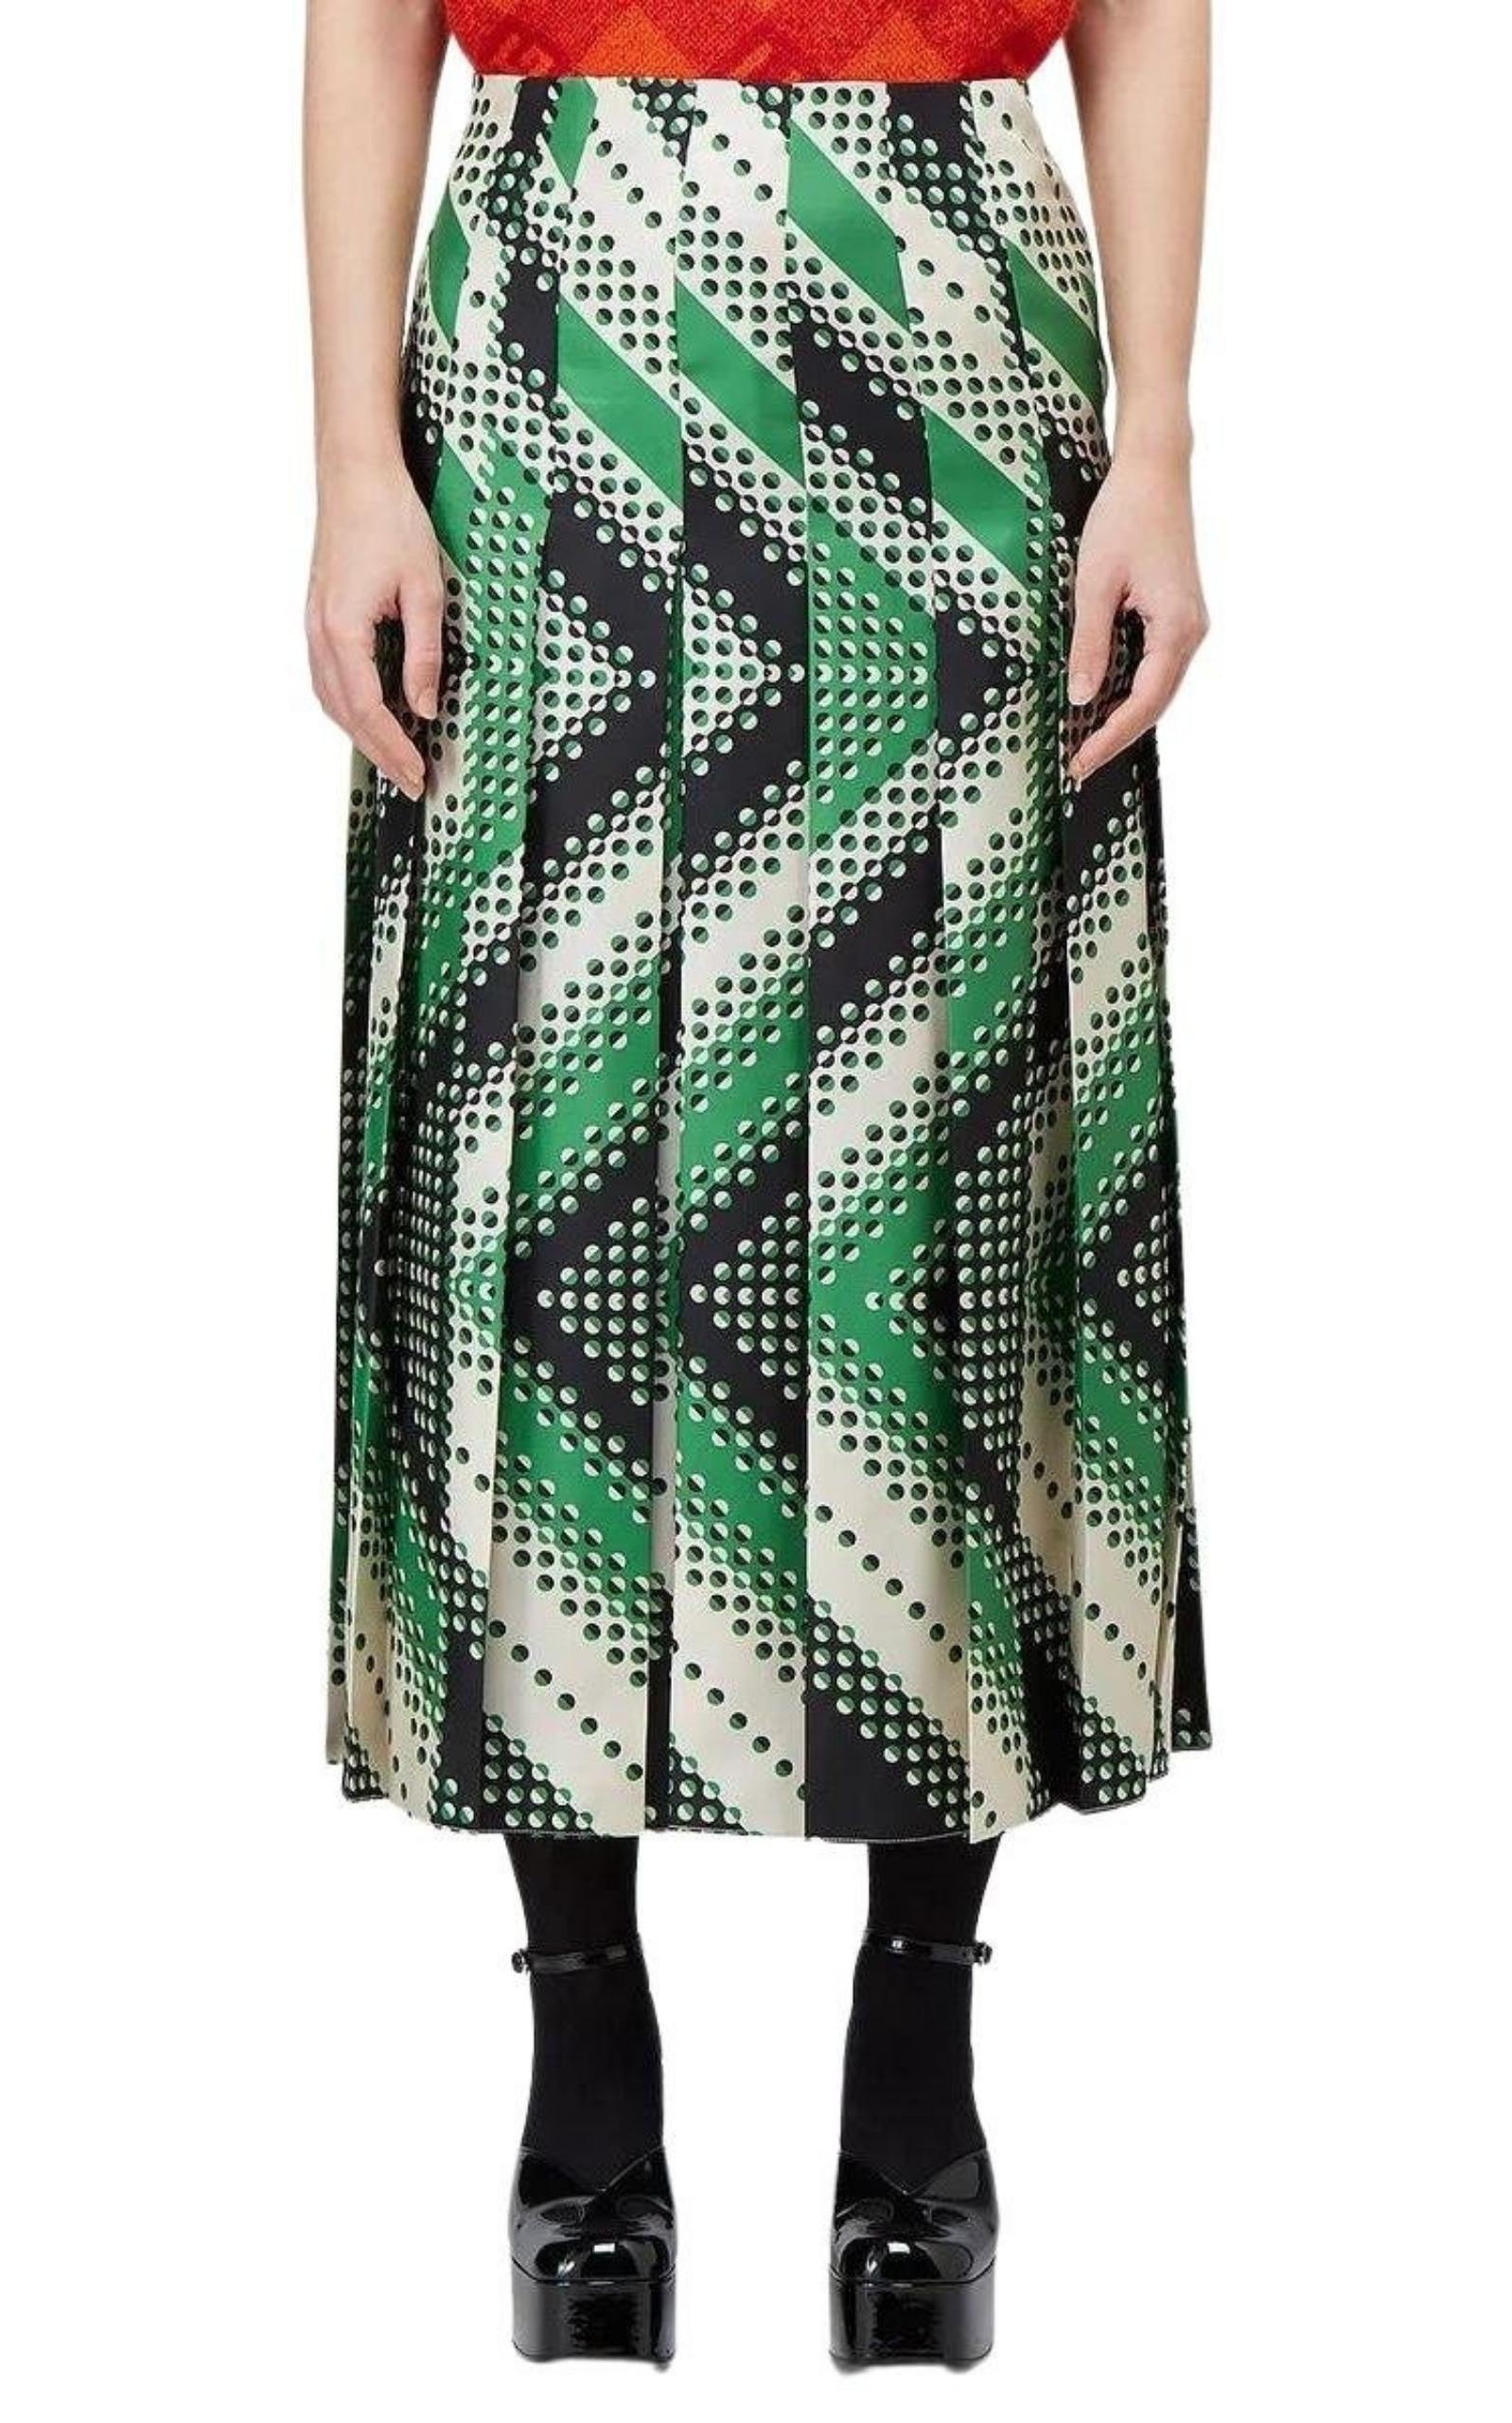  GucciPleated Chevron Print Skirt - Runway Catalog